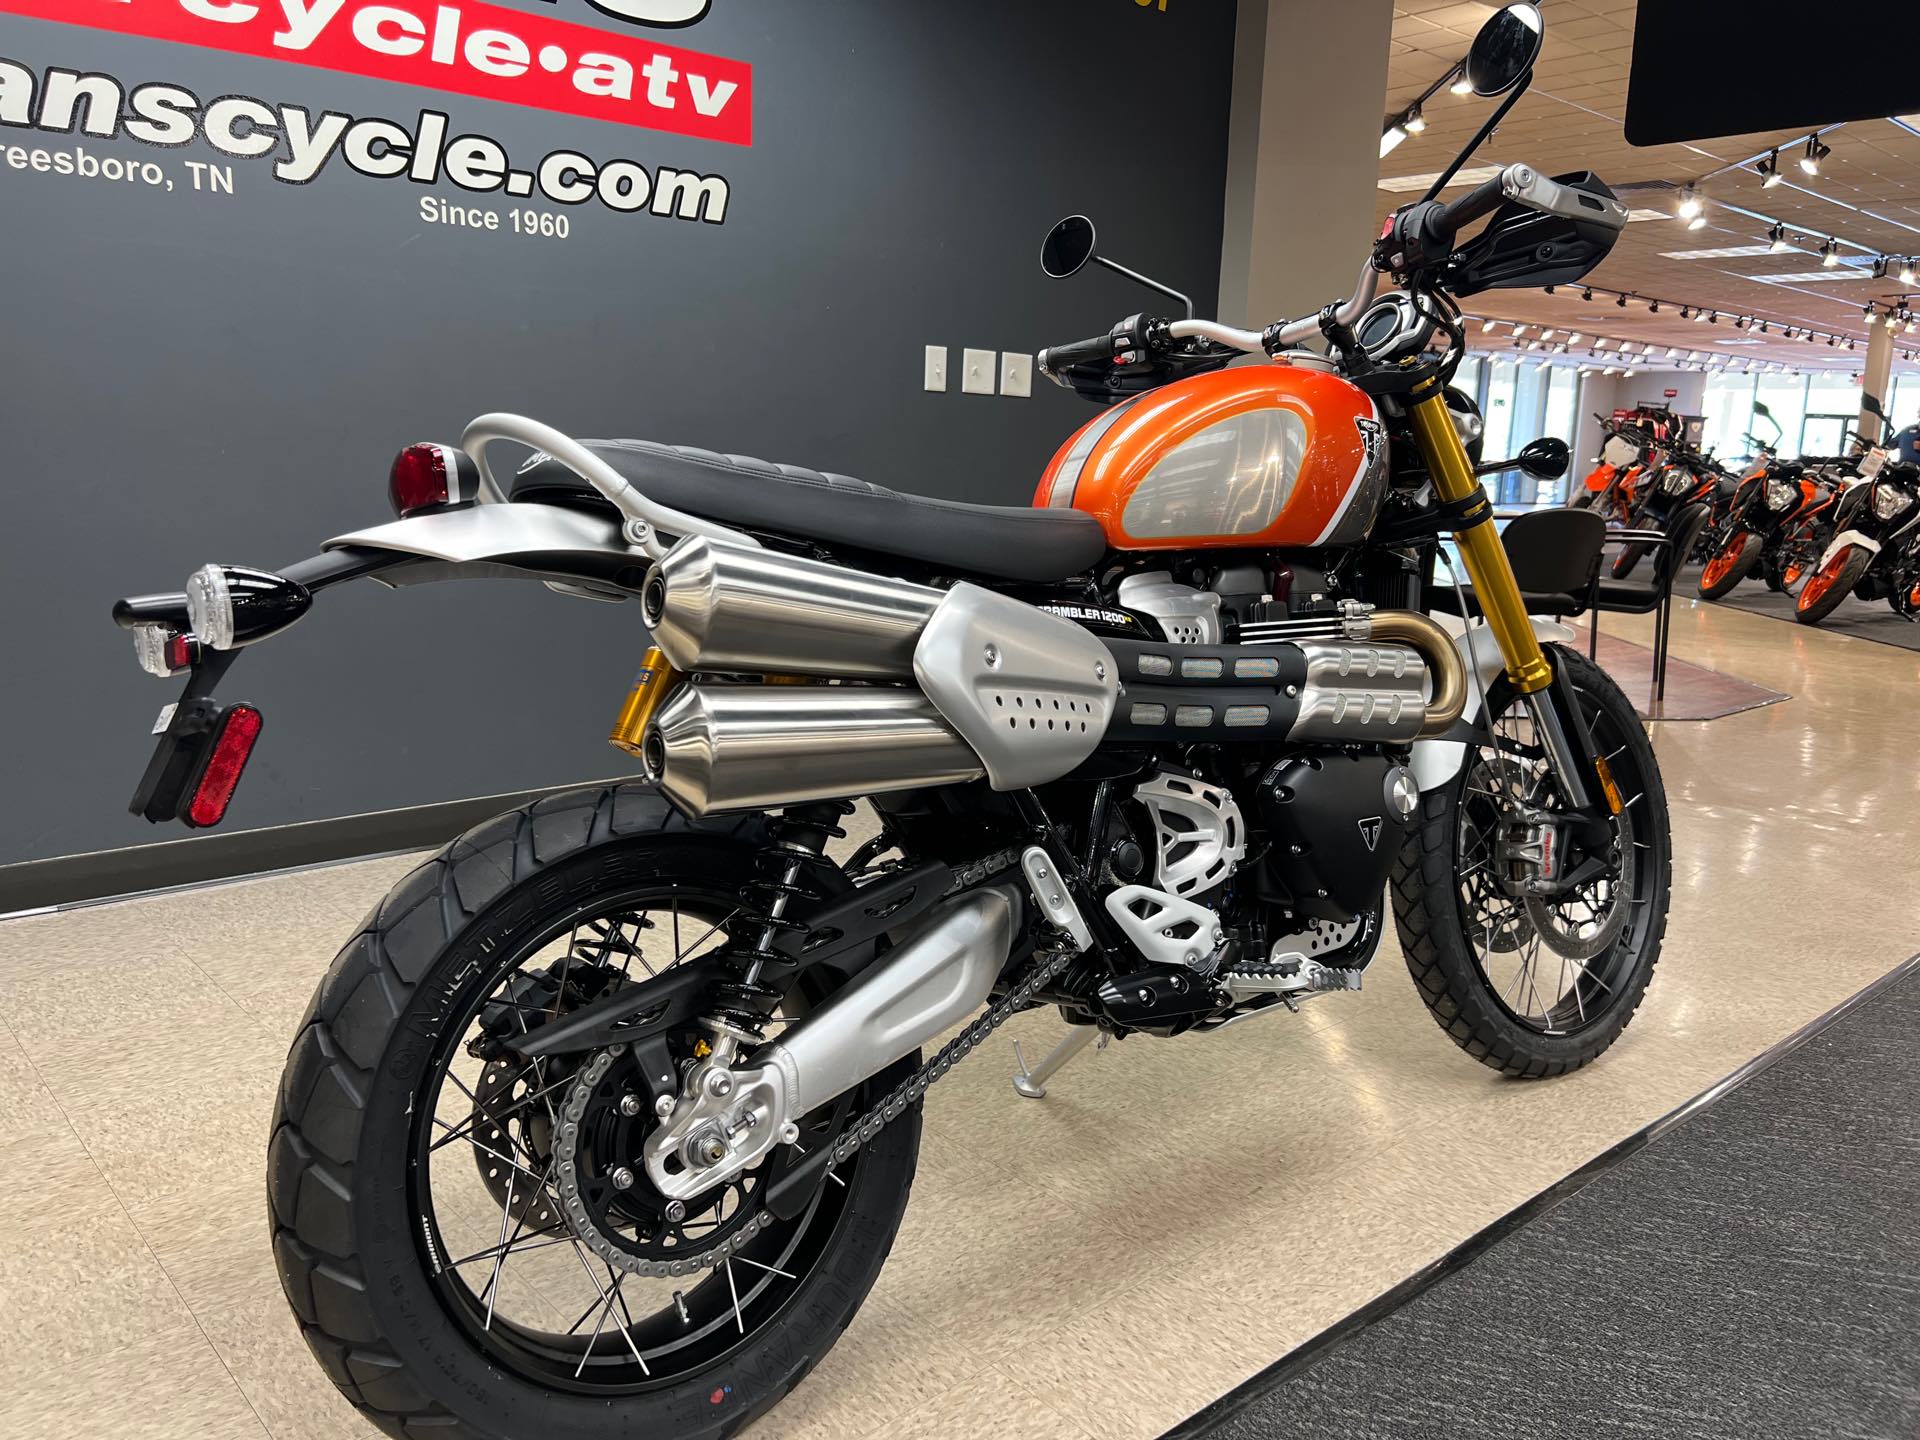 2022 Triumph Scrambler 1200 XE Gold Line at Sloans Motorcycle ATV, Murfreesboro, TN, 37129